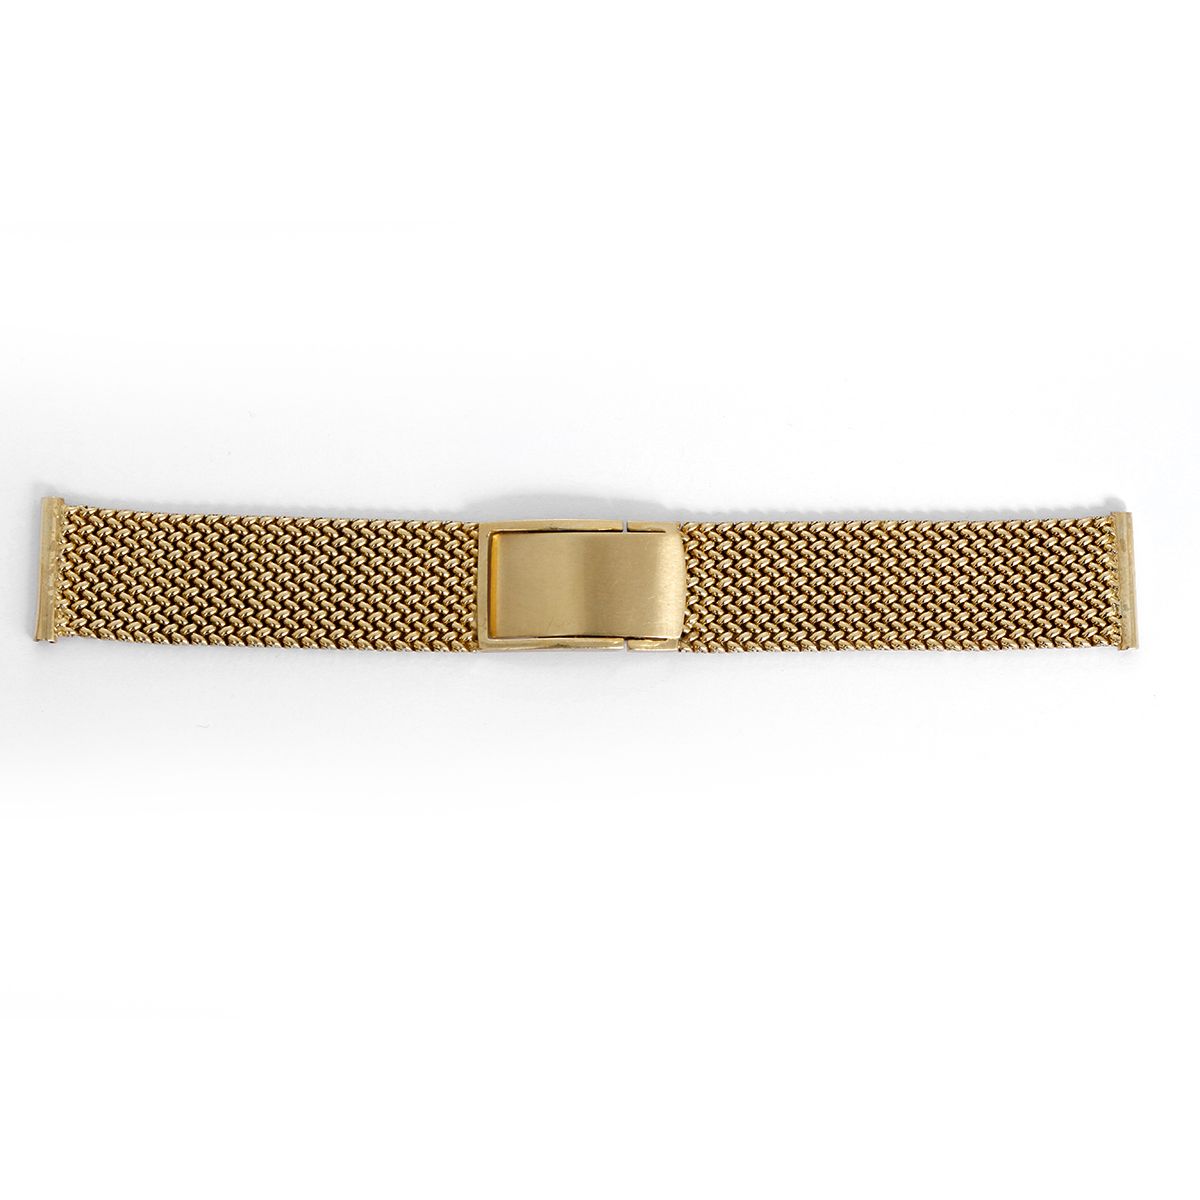 SALE  Mesh 14k White or Yellow Gold Bracelet only 79500  Gold Bracelets